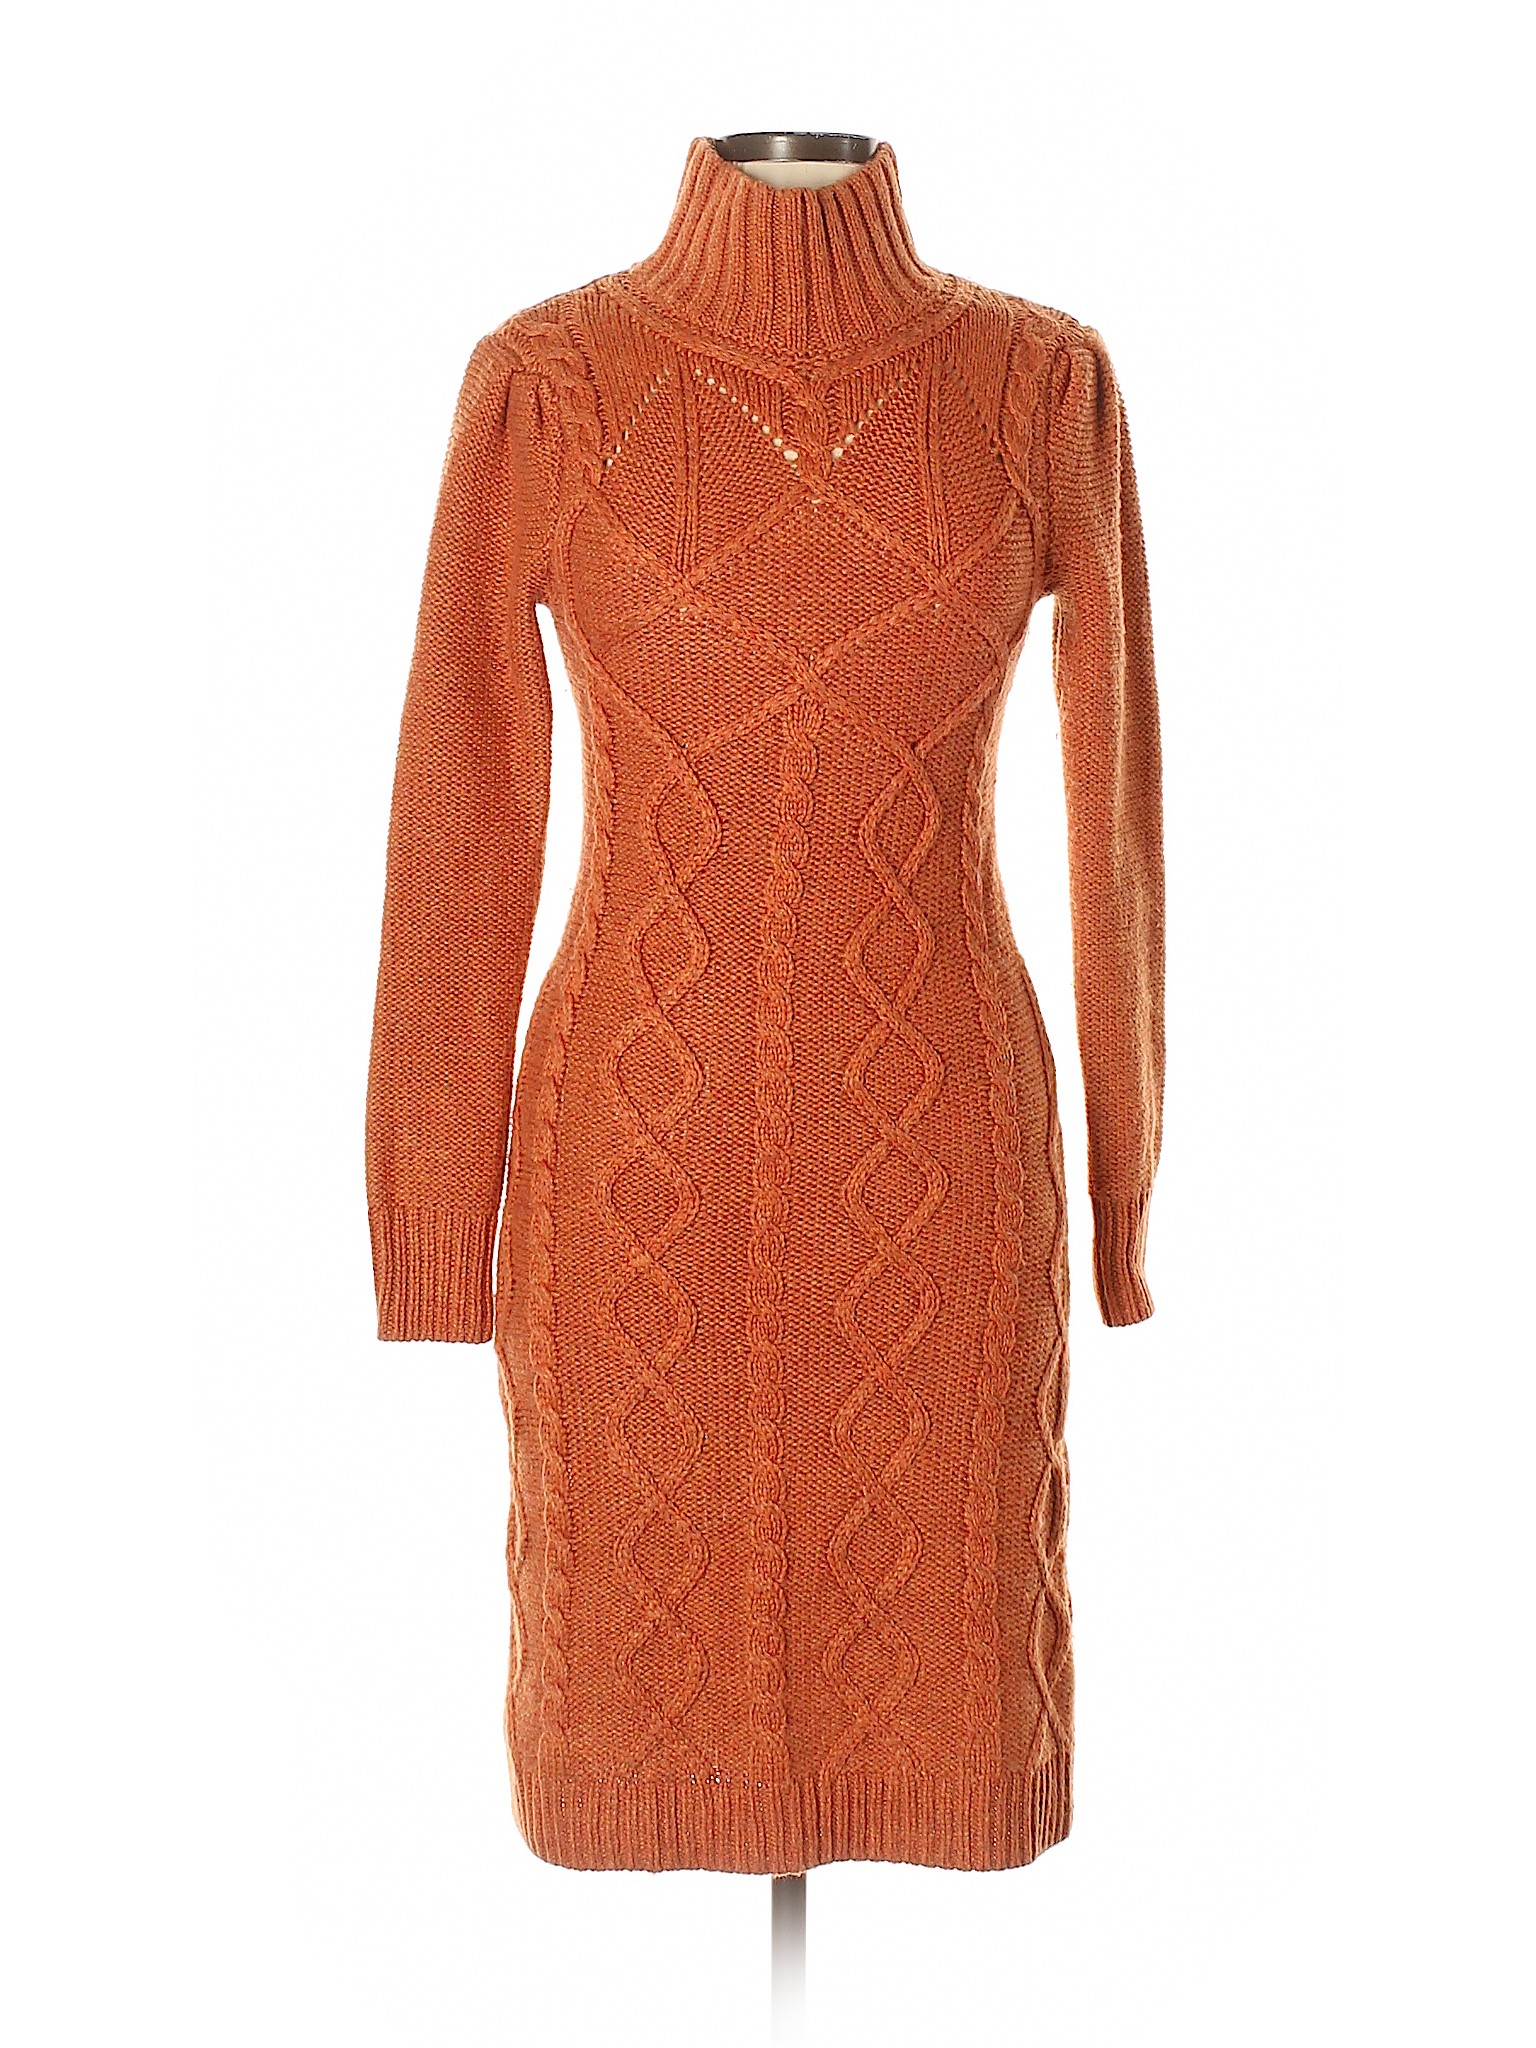 Moda International Women Orange Casual Dress Med | eBay